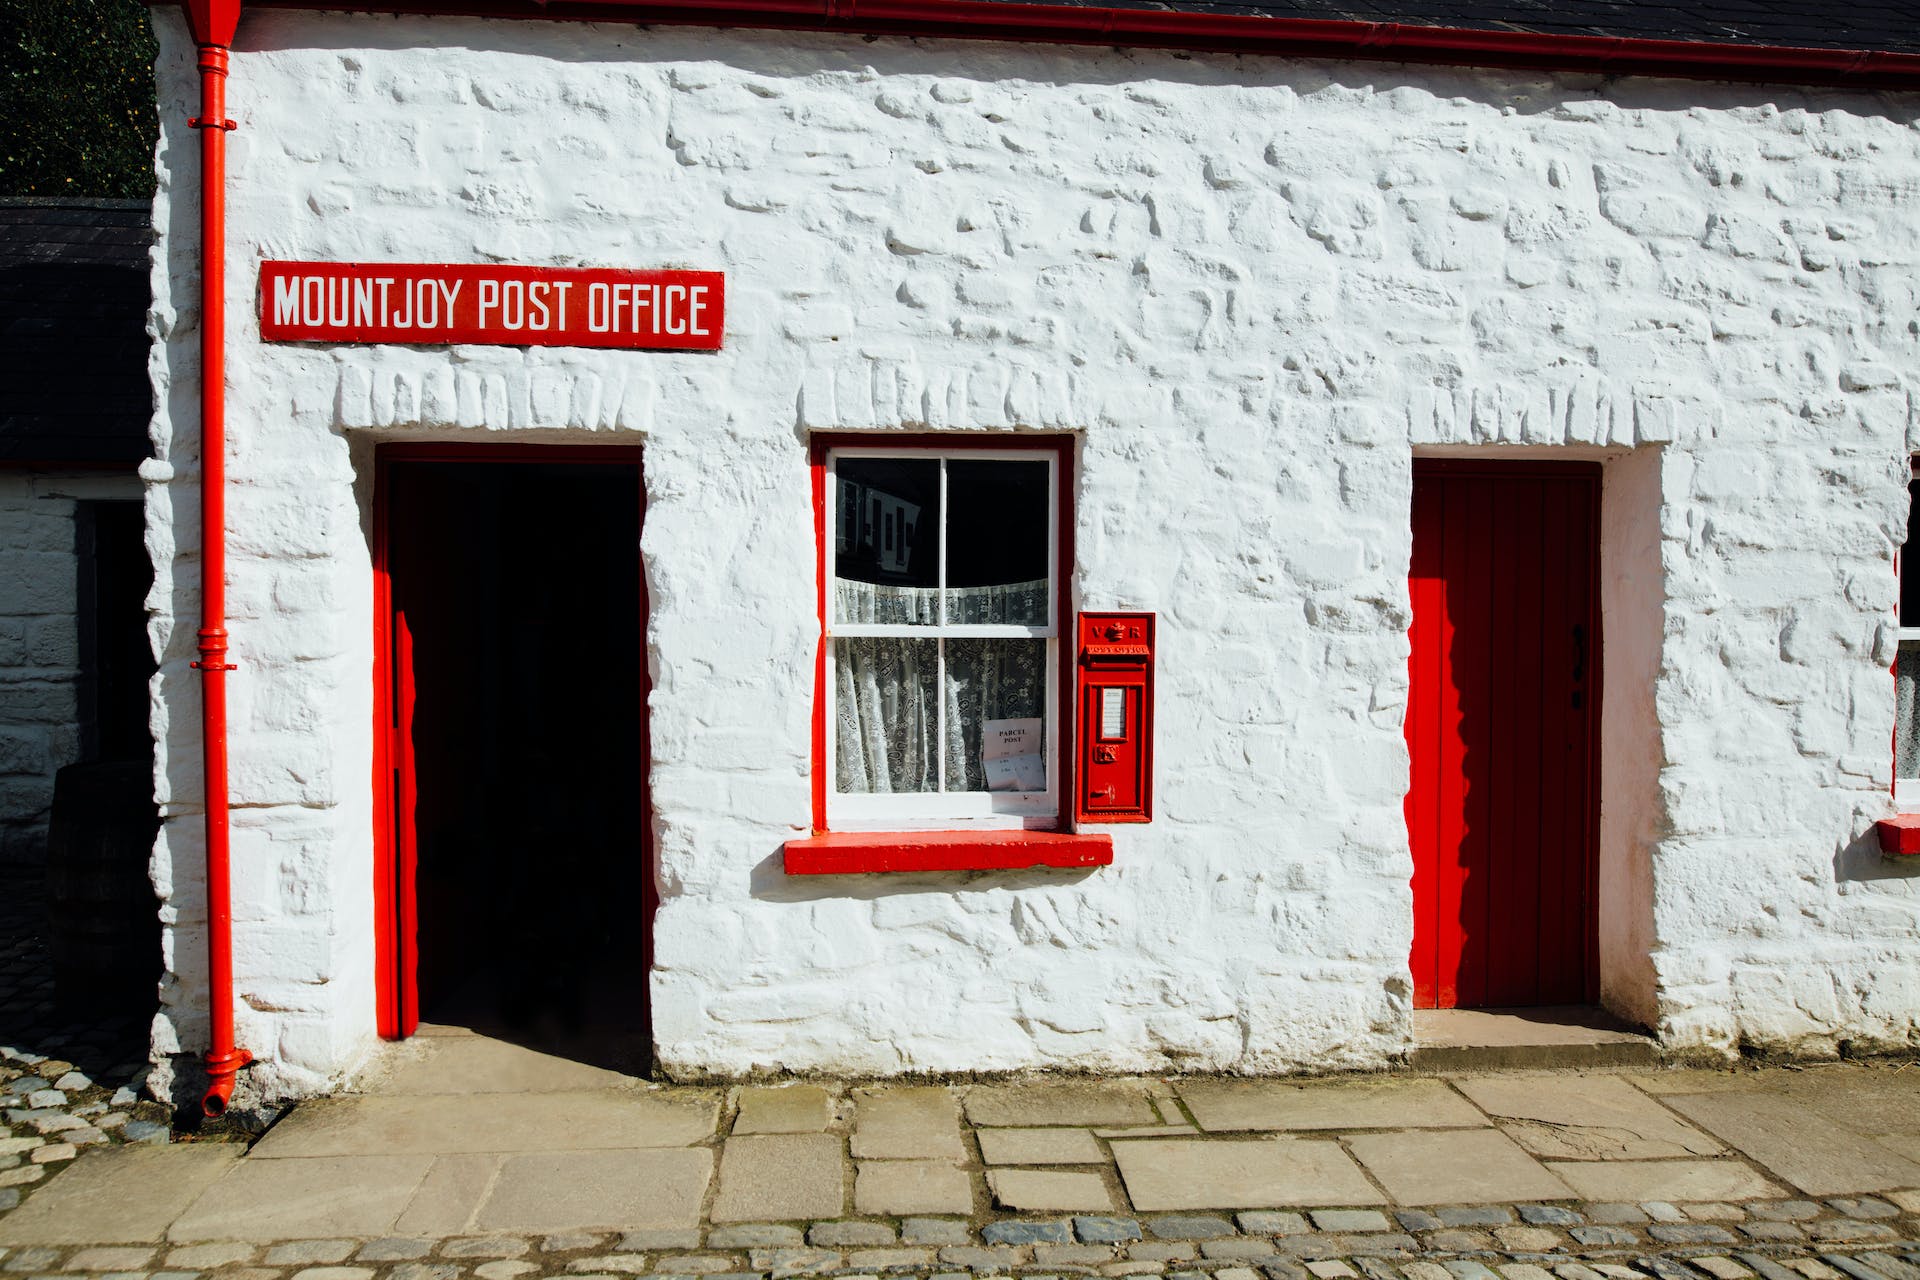 Sub Post office in Mount Joy